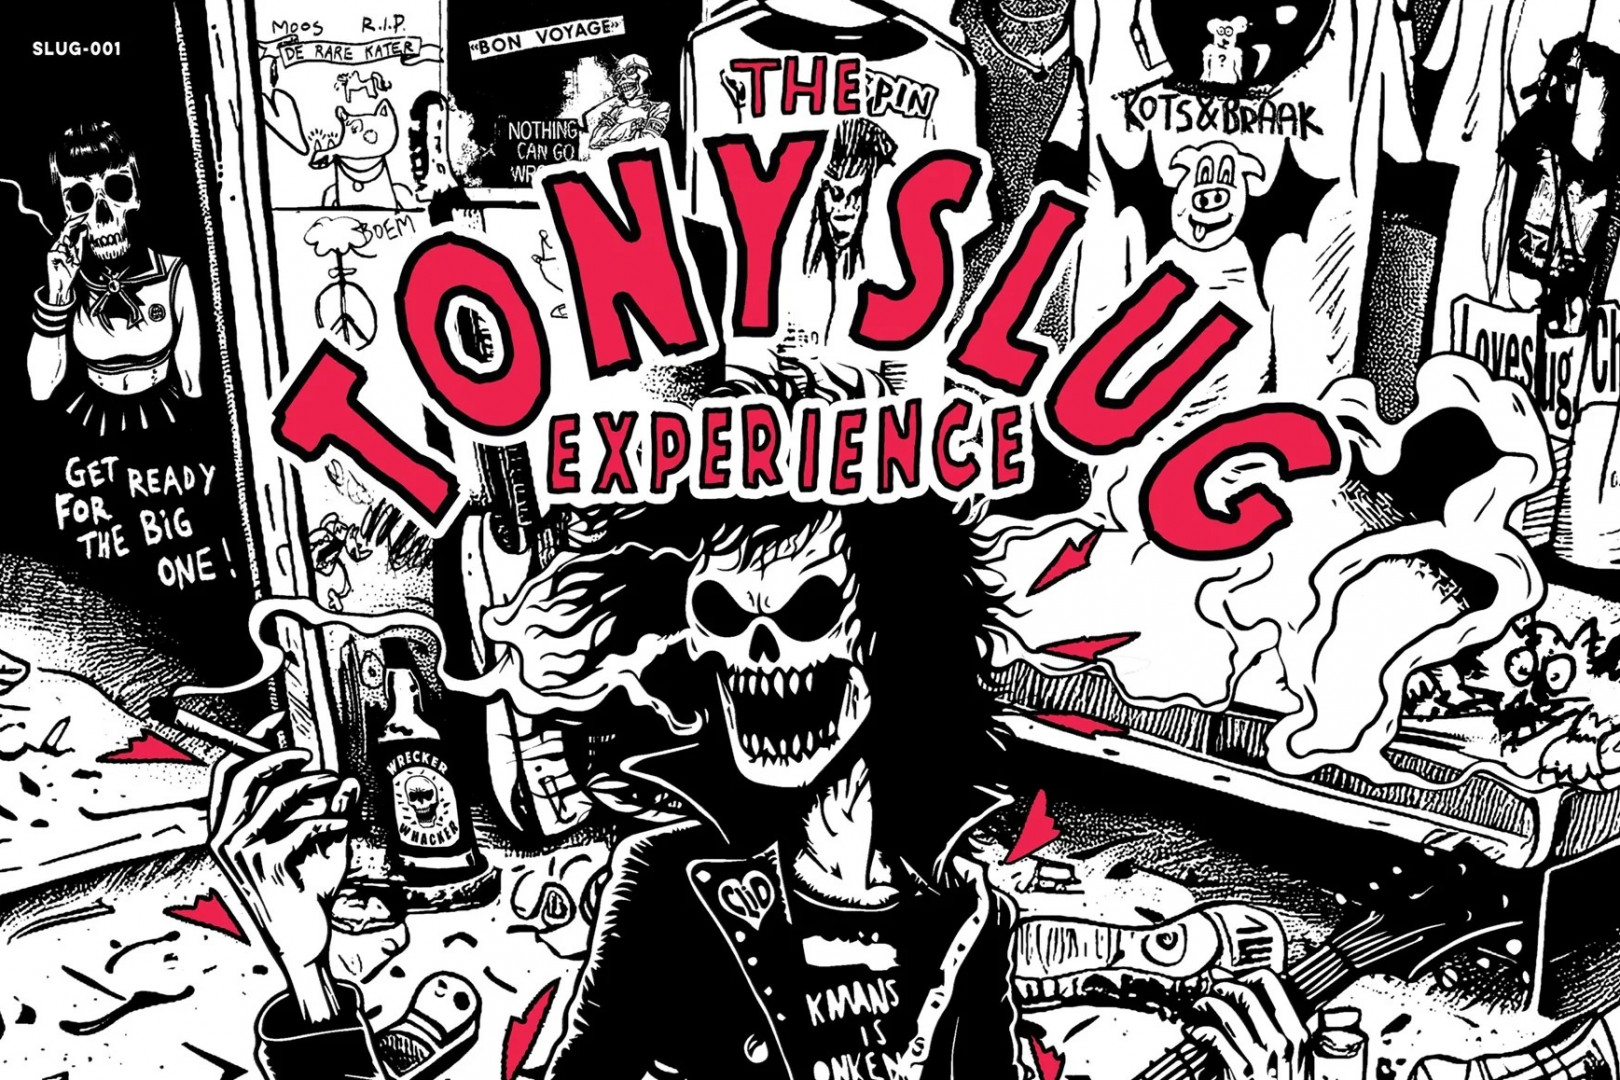 Alternative Tentacles to release posthumous album by Tony Slug of BGK